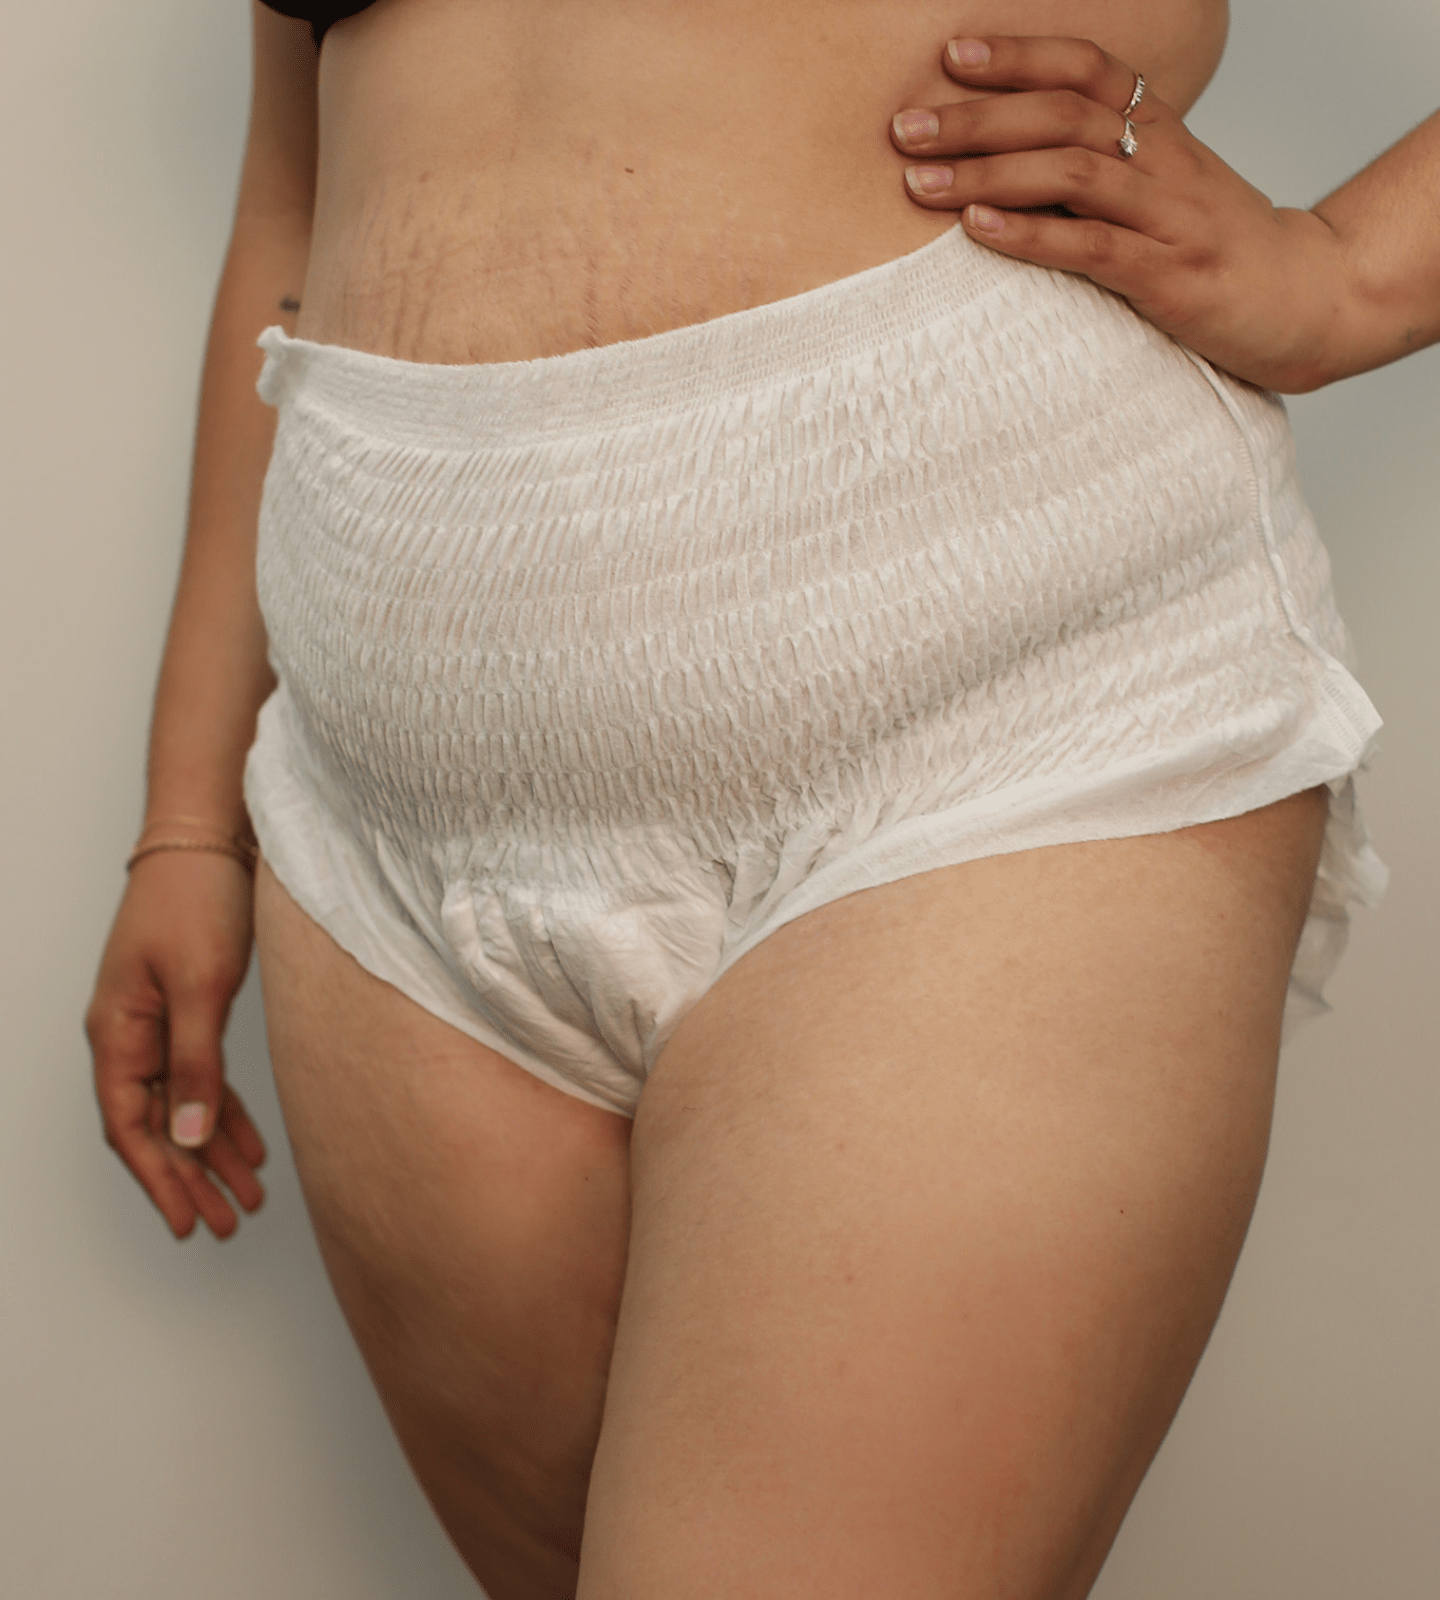 Partum Panties - 2 x packs of Disposable Postpartum Underwear High Waisted,  Soft & Absorbent - Medium